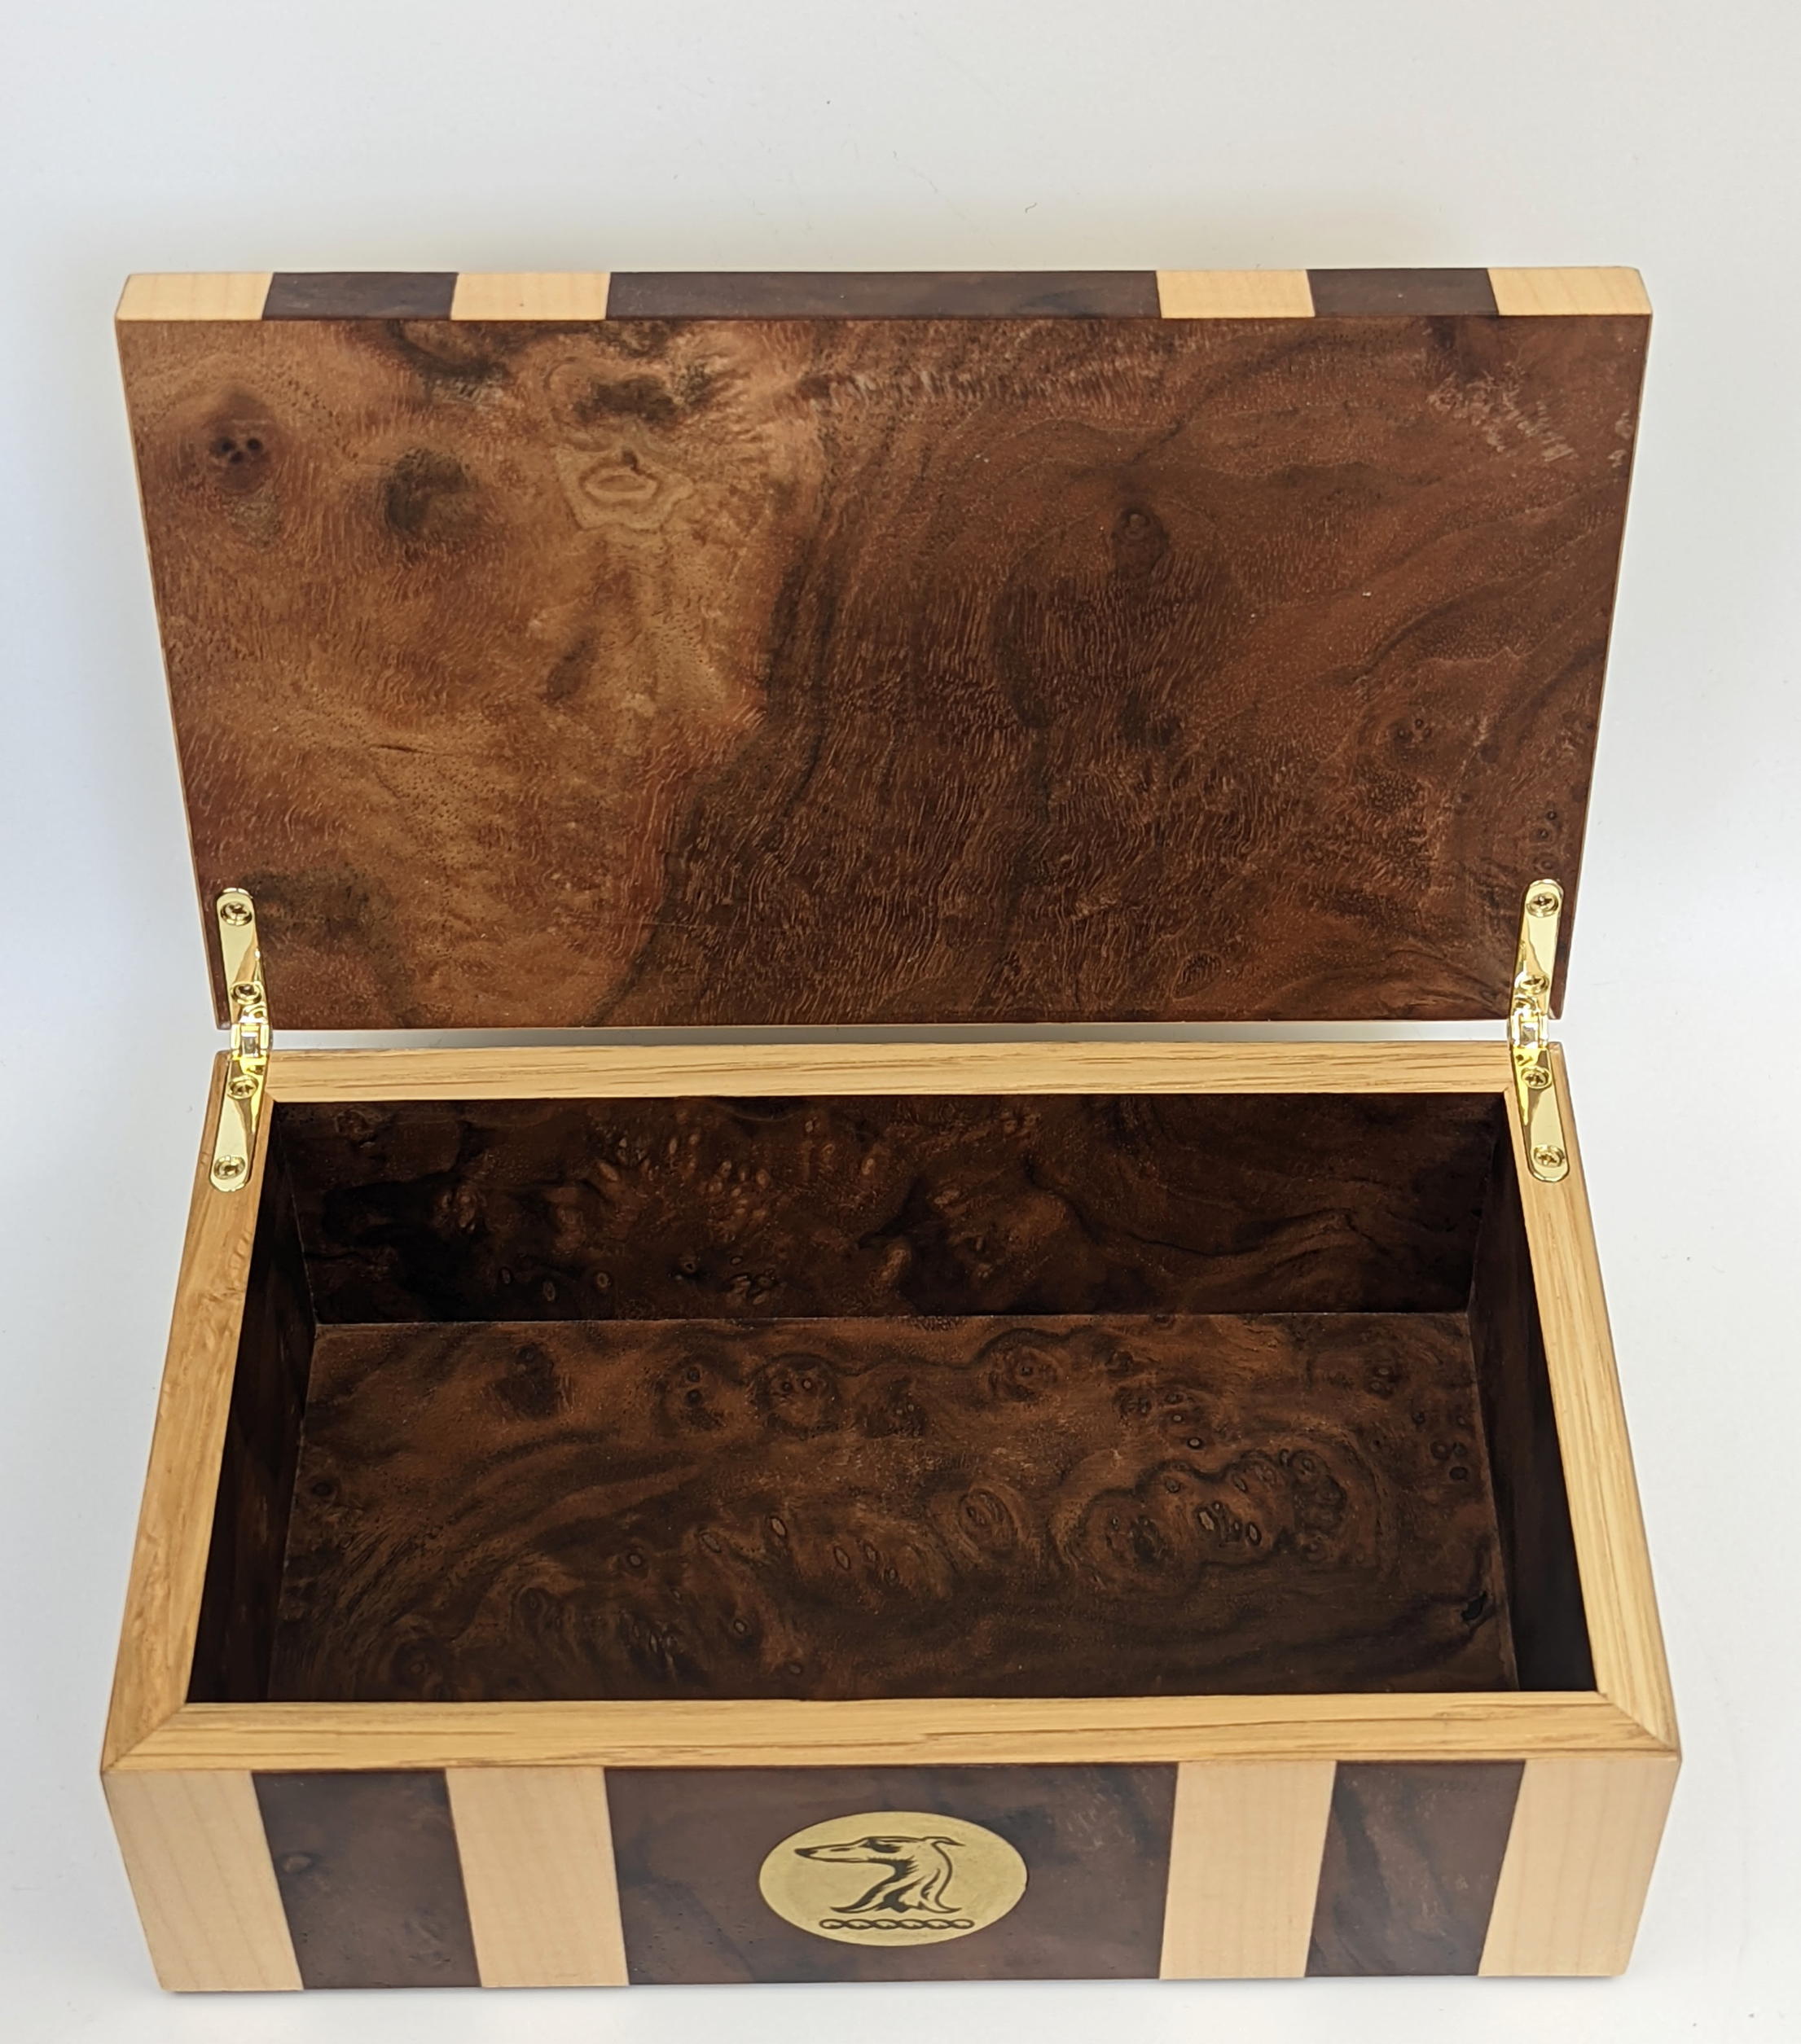 A Connaught (Hotel) cigar exchange box, Deco style with burr walnut veneer, H.7cm L.20cm D.12cm - Image 5 of 5